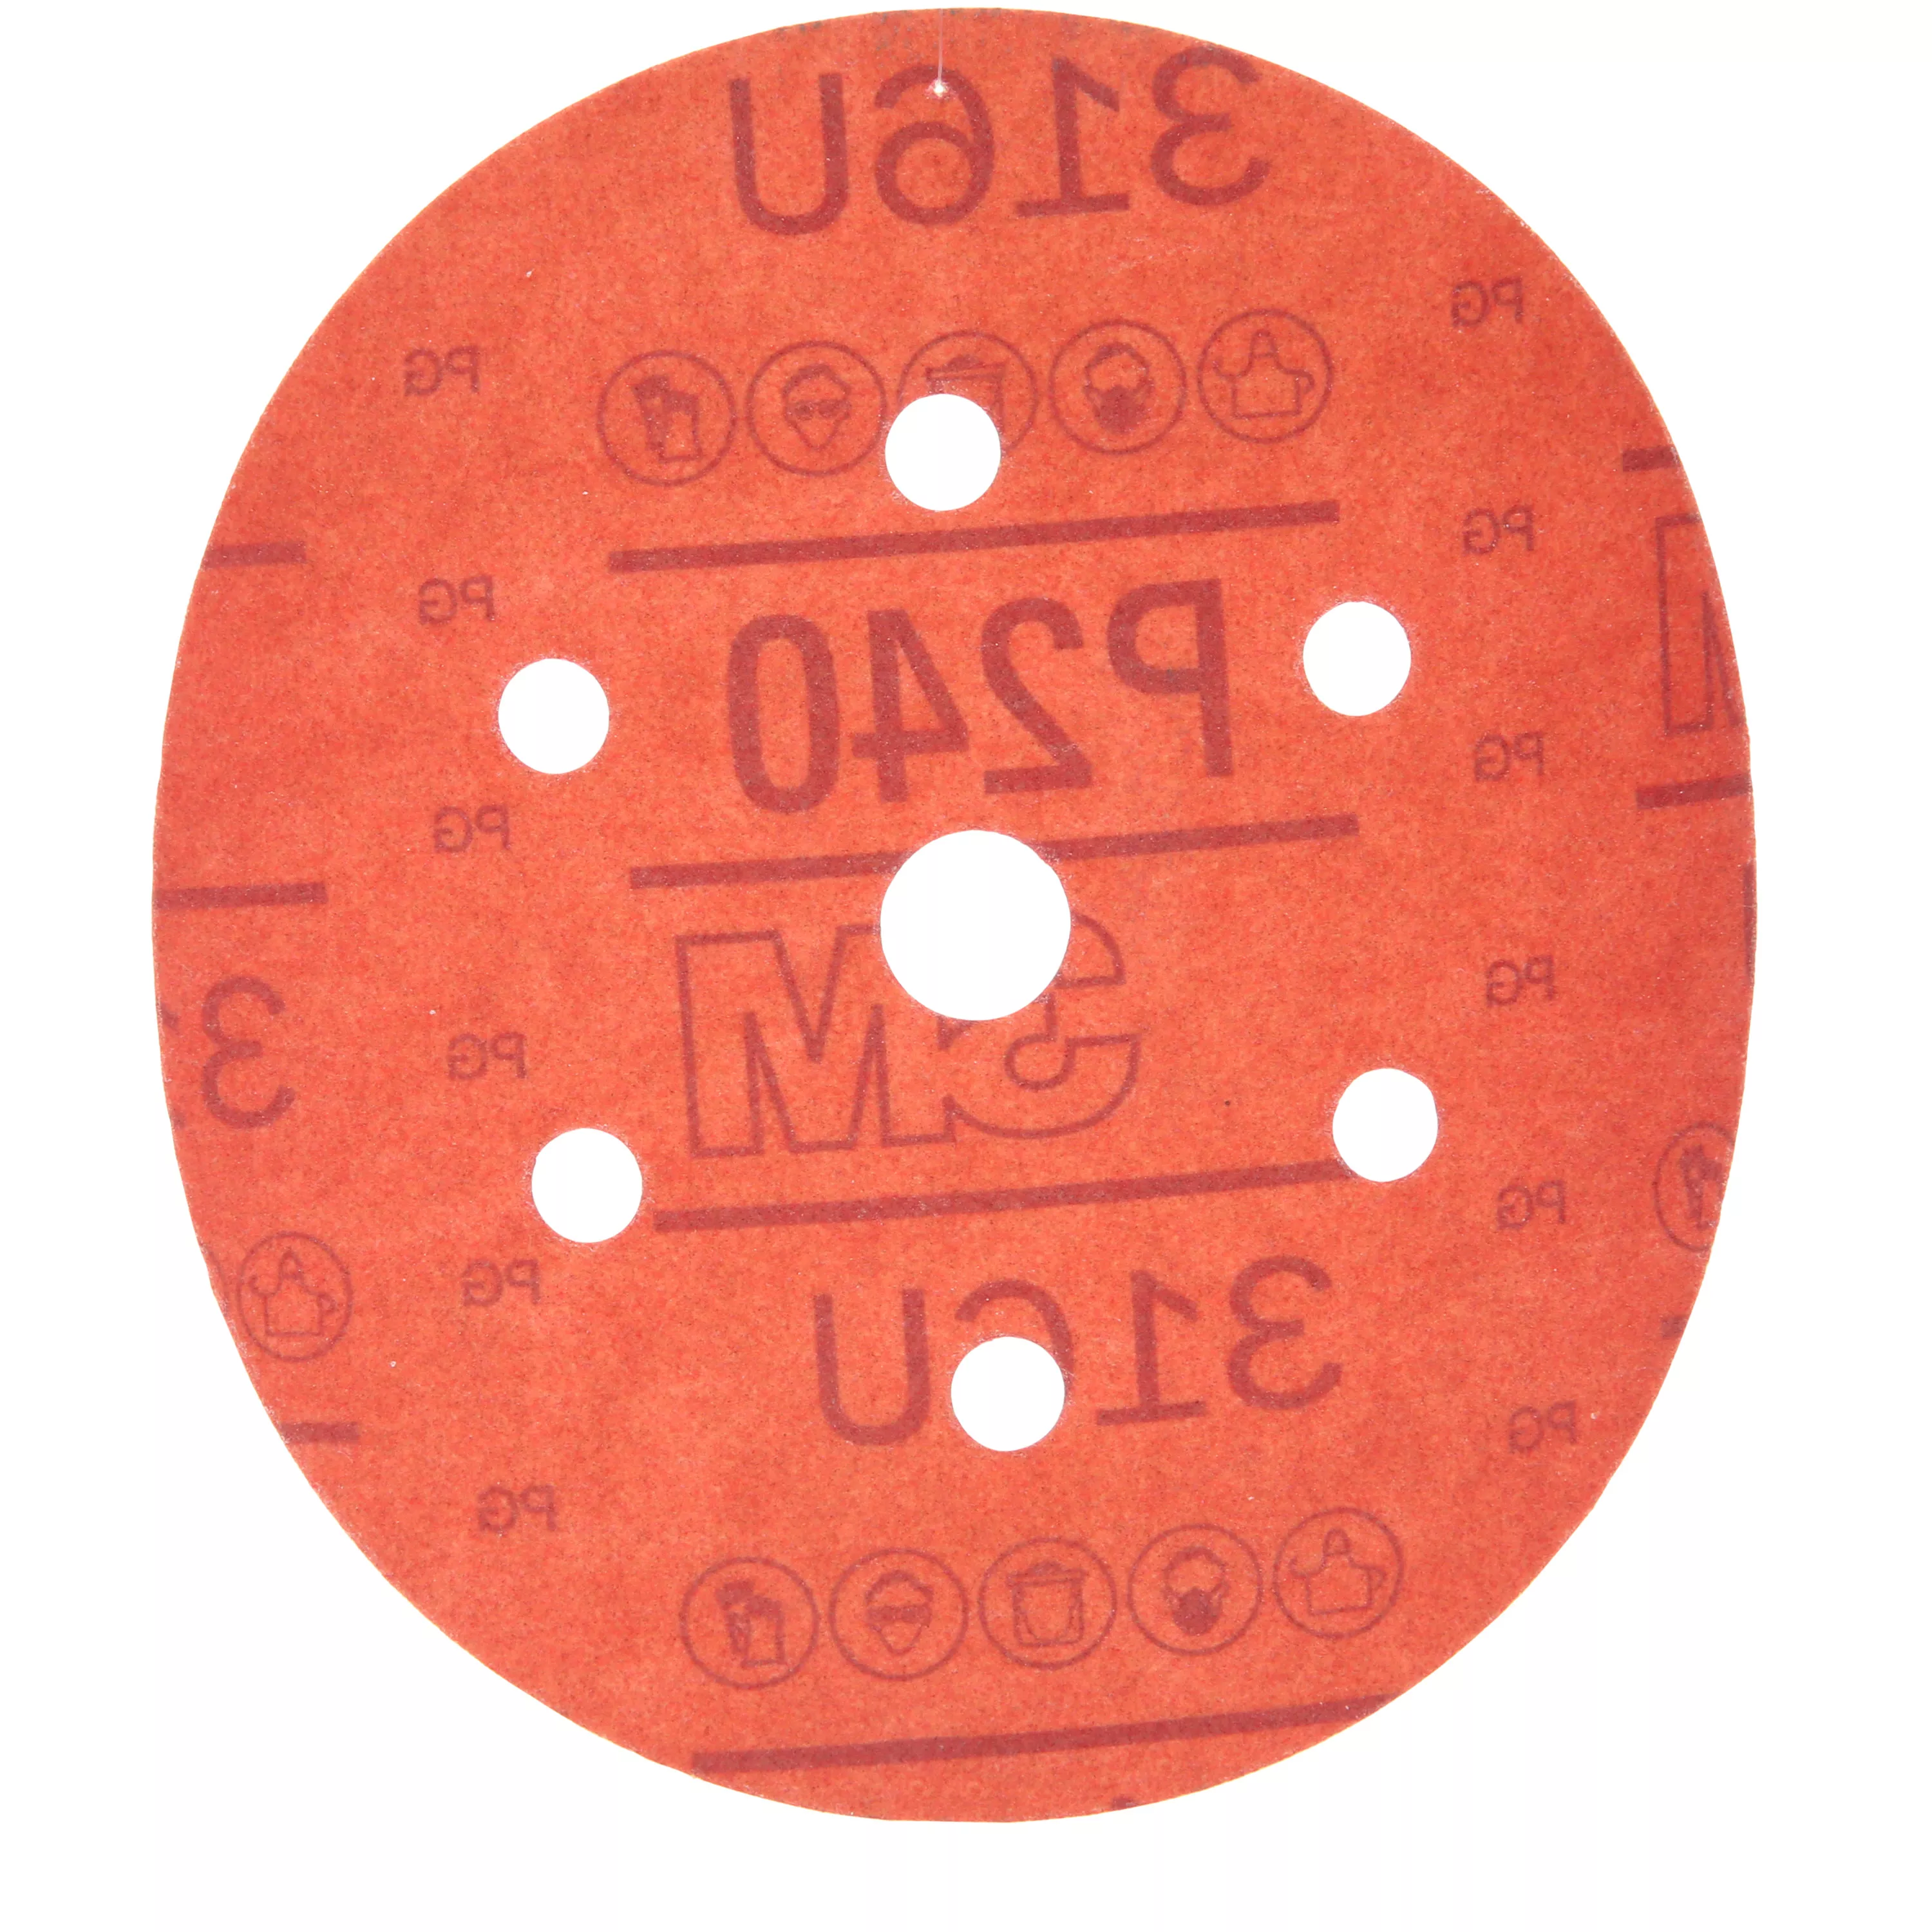 SKU 7000045456 | 3M™ Hookit™ Red Abrasive Disc Dust Free